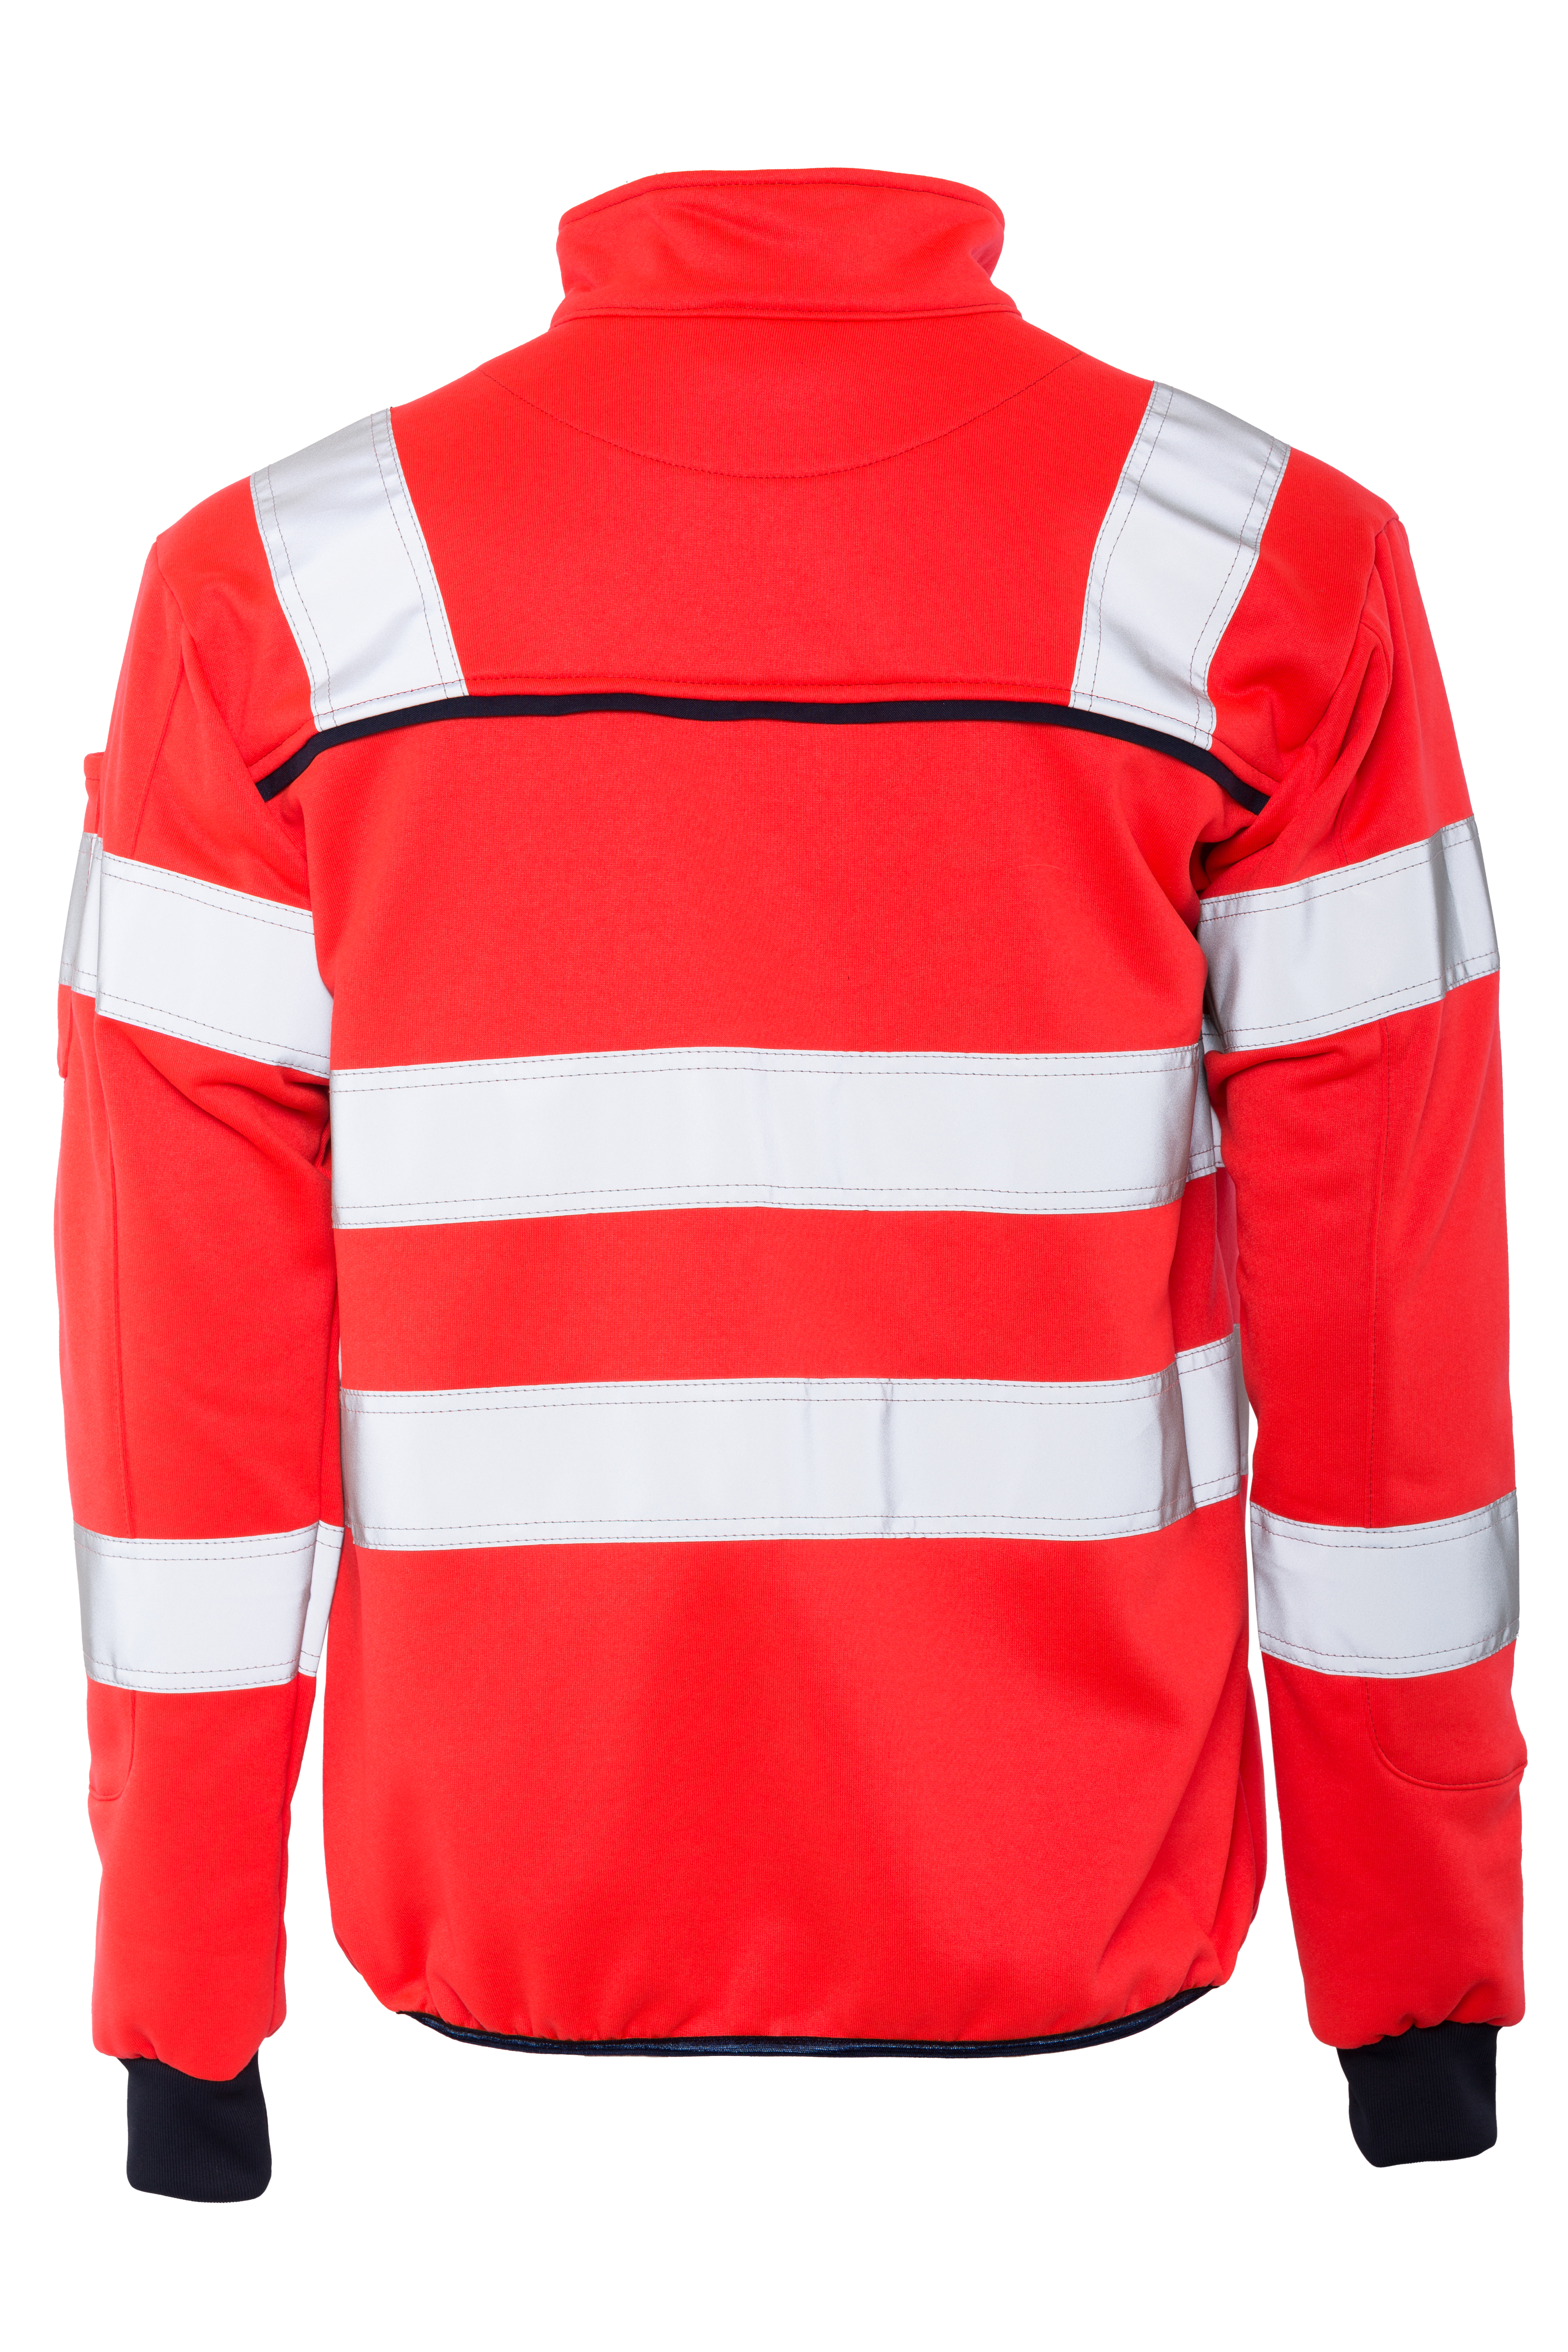 Rescuewear Sweatjacke Dynamic HiVis Klasse 3 Marineblau / Neon Rot`W-Linie` - XXS